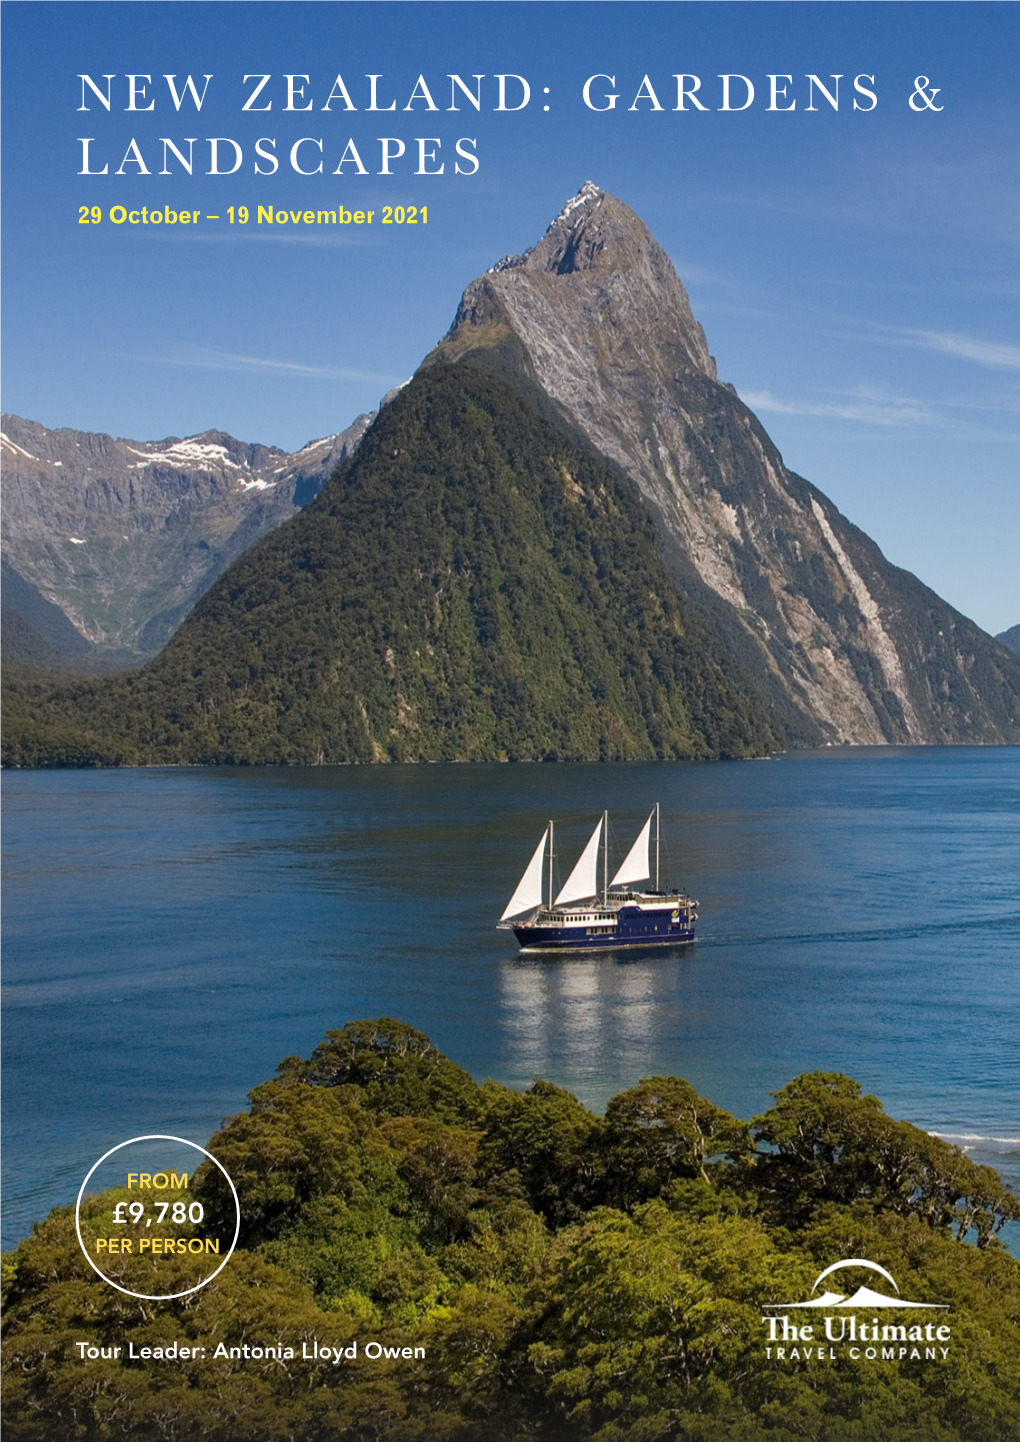 New Zealand: Gardens & Landscapes